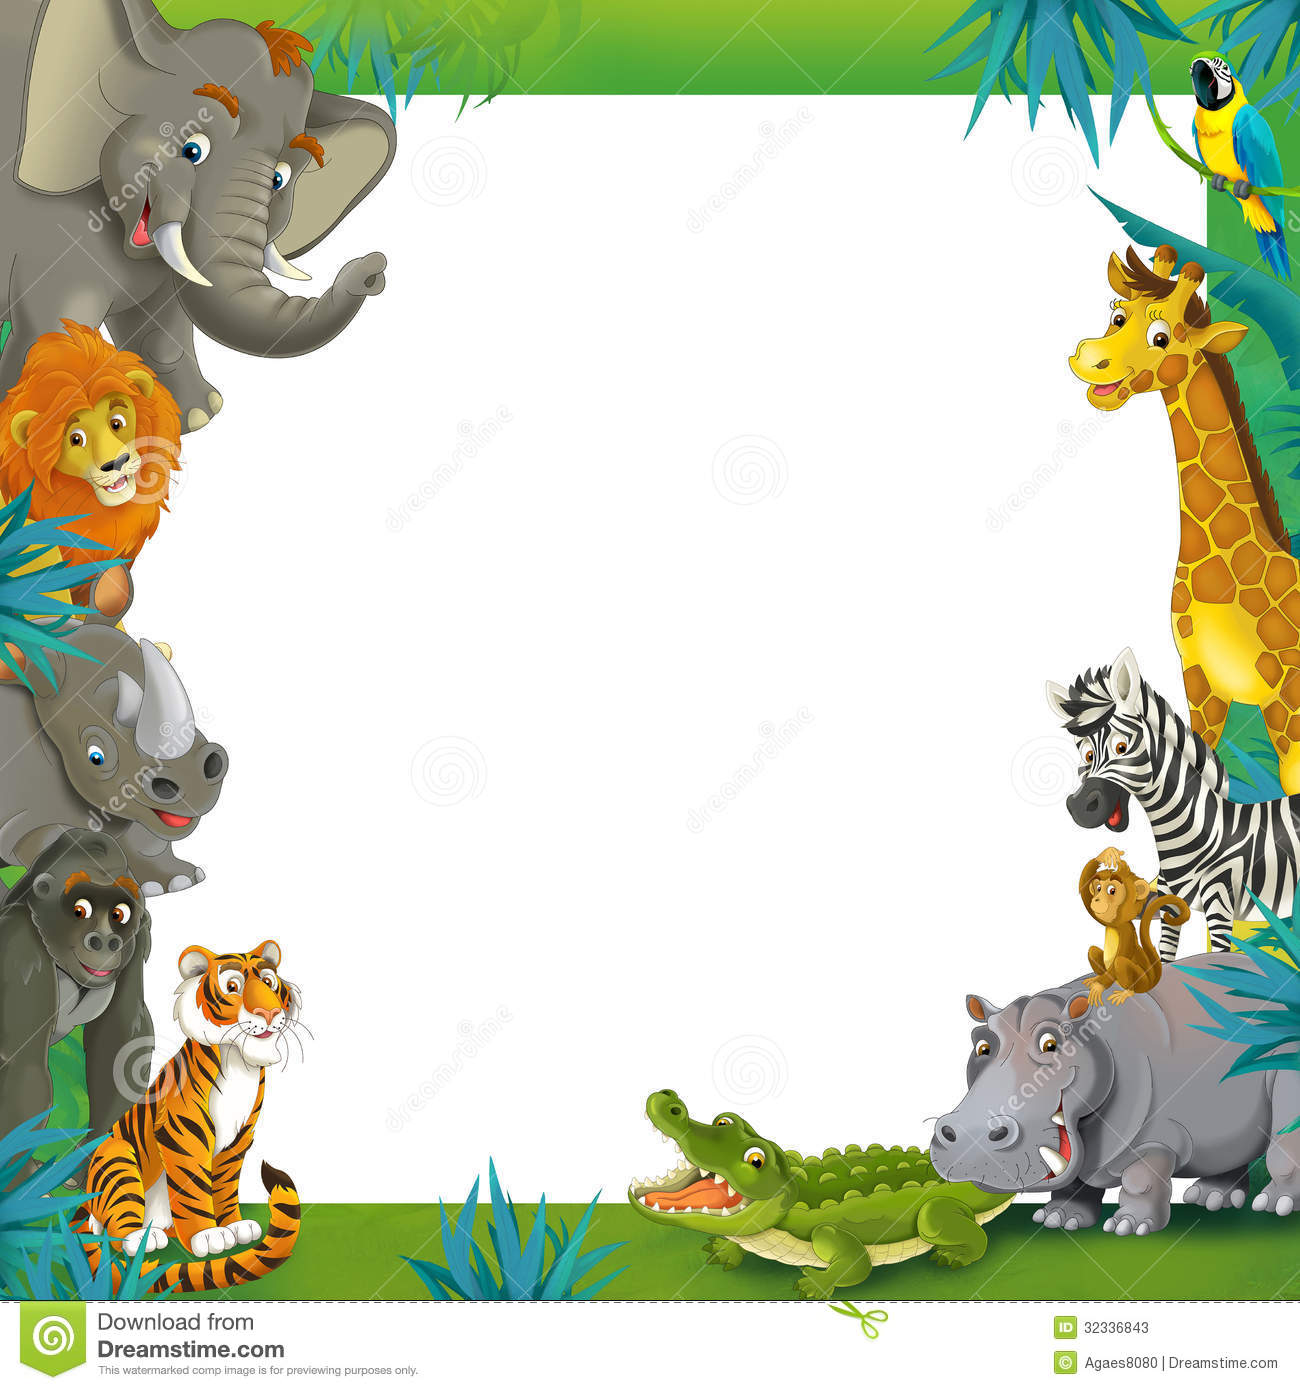 6-best-images-of-free-printable-safari-animal-border-jungle-animal